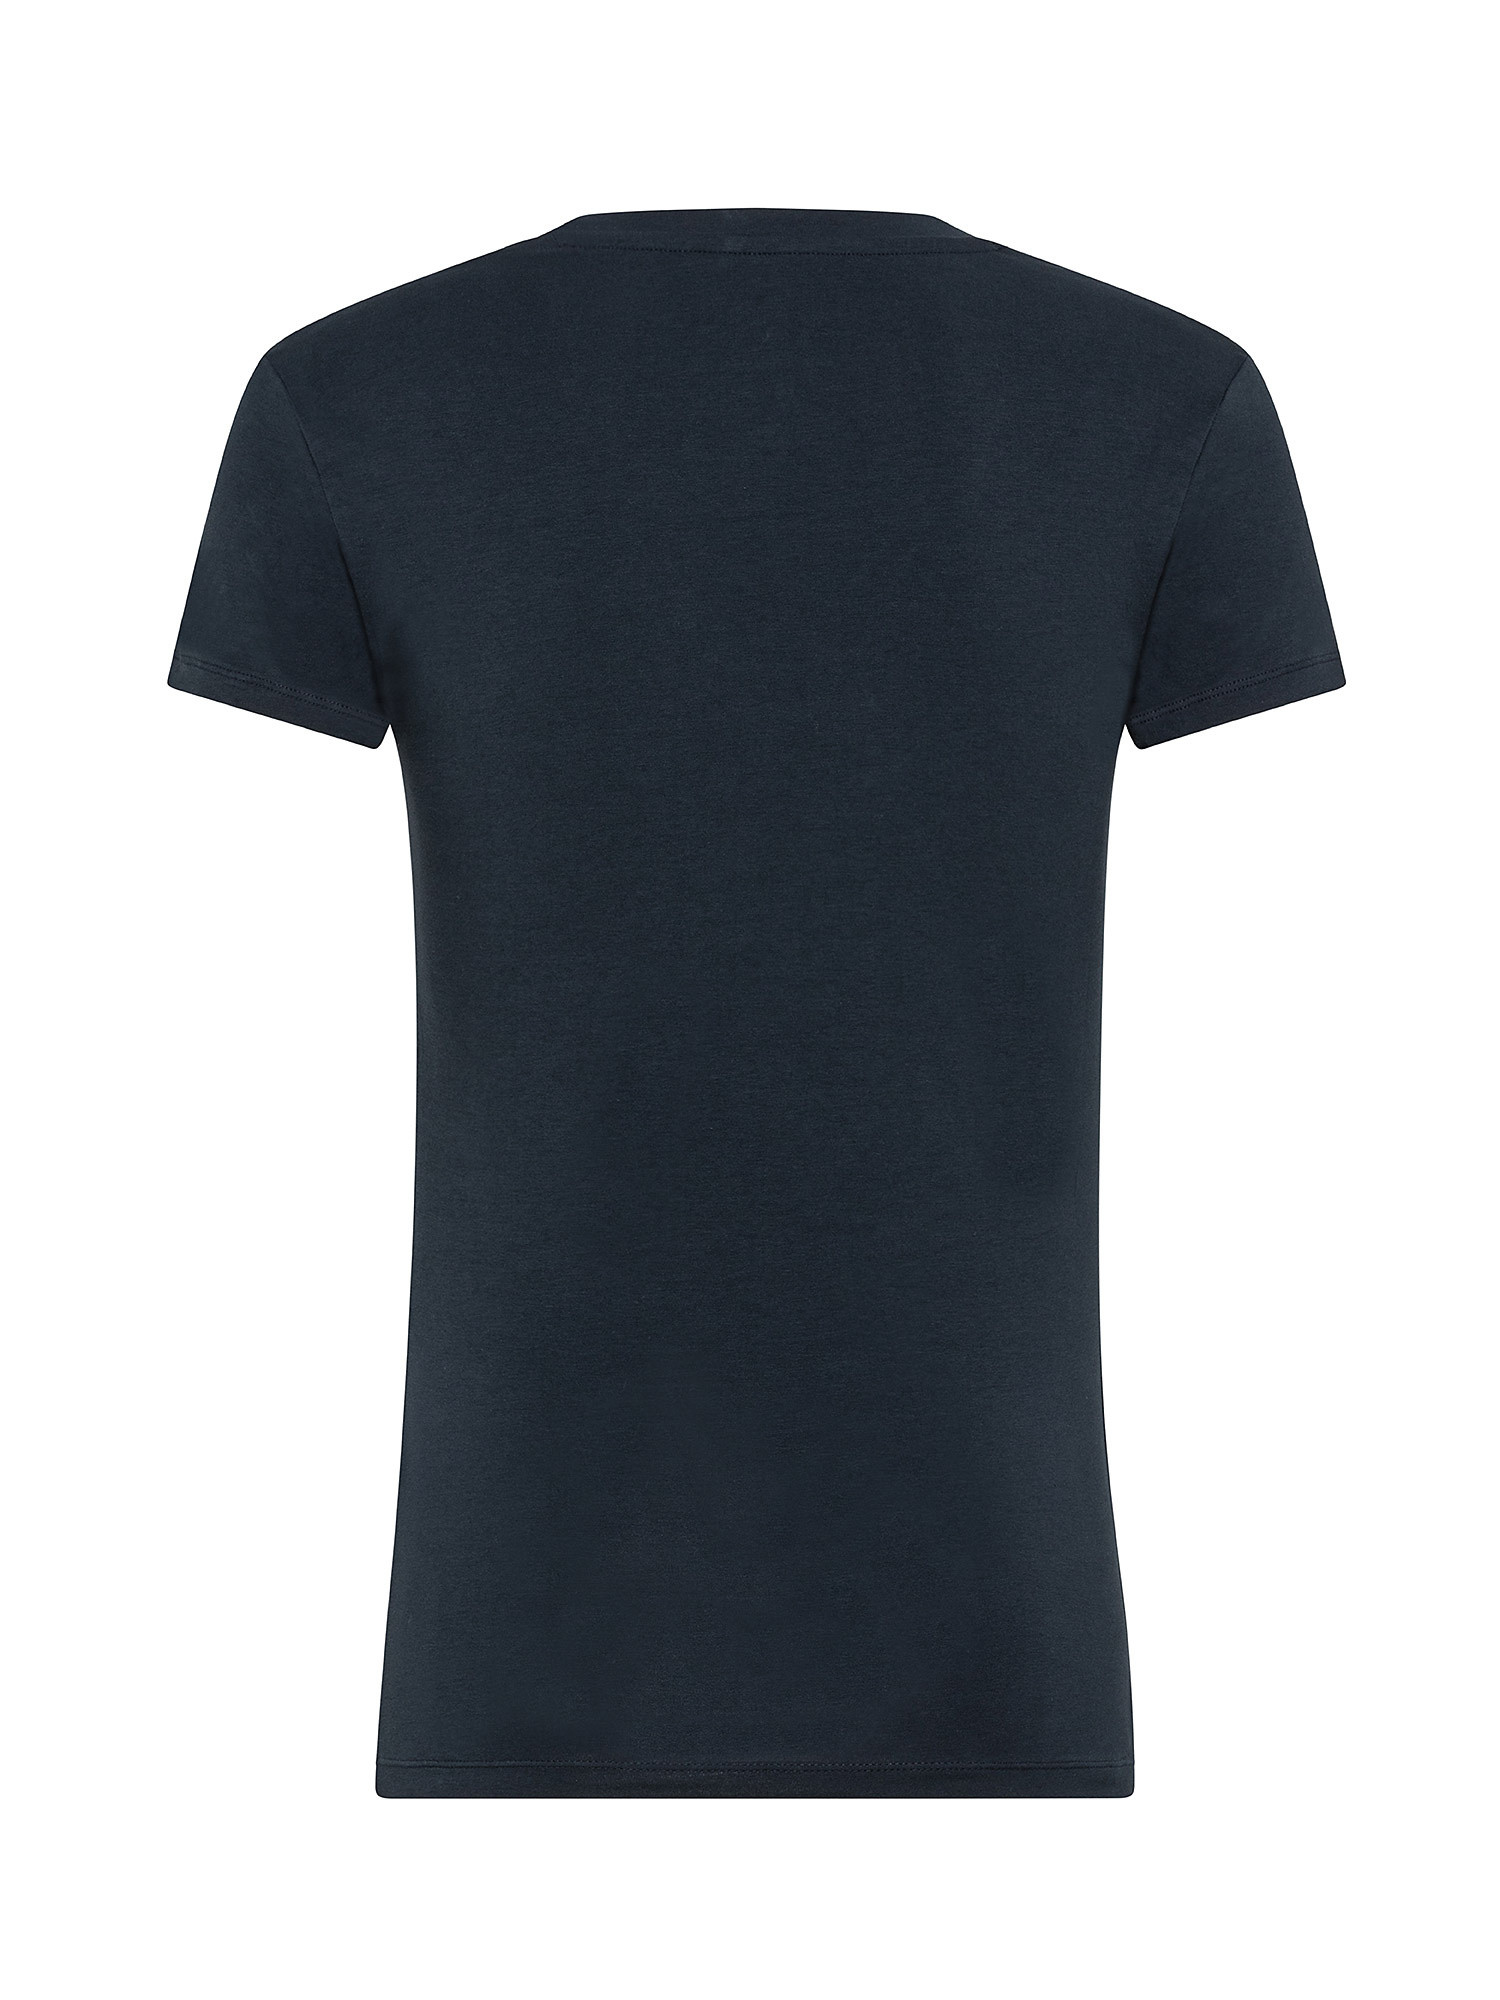 T-shirt slim fit in cotone Pima, Blu, large image number 1